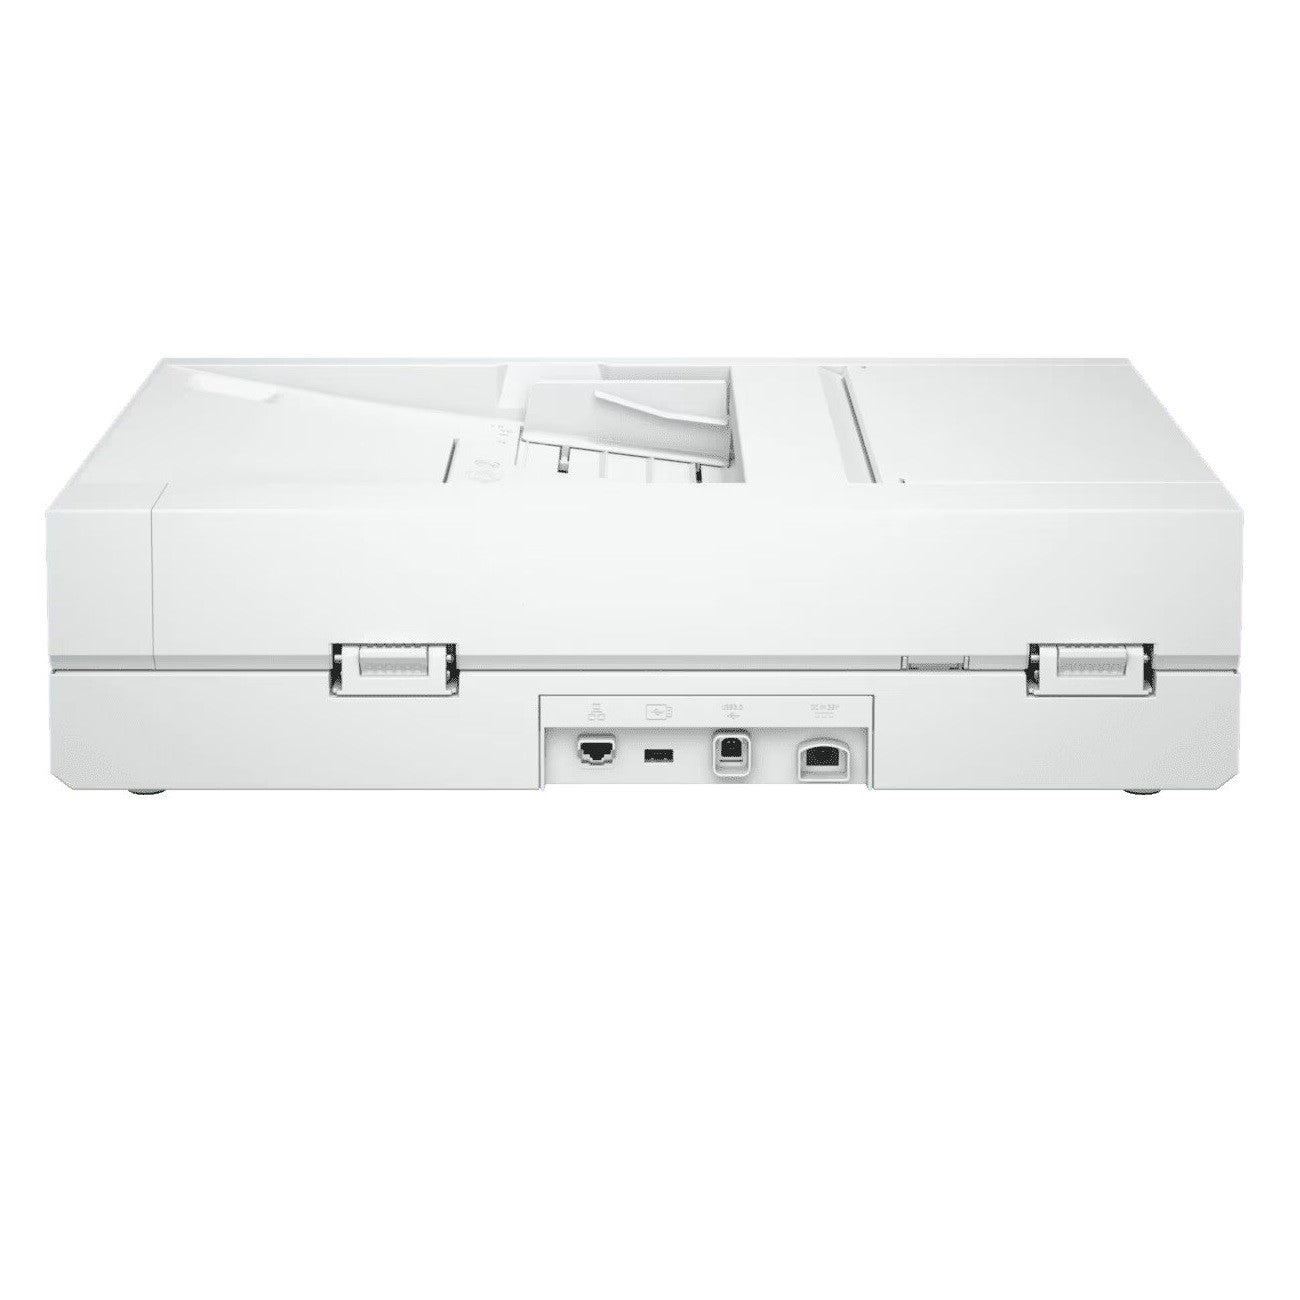 Escáner HP ScanJet Pro N4600 fnw1, USB, WiFi, Ethernet